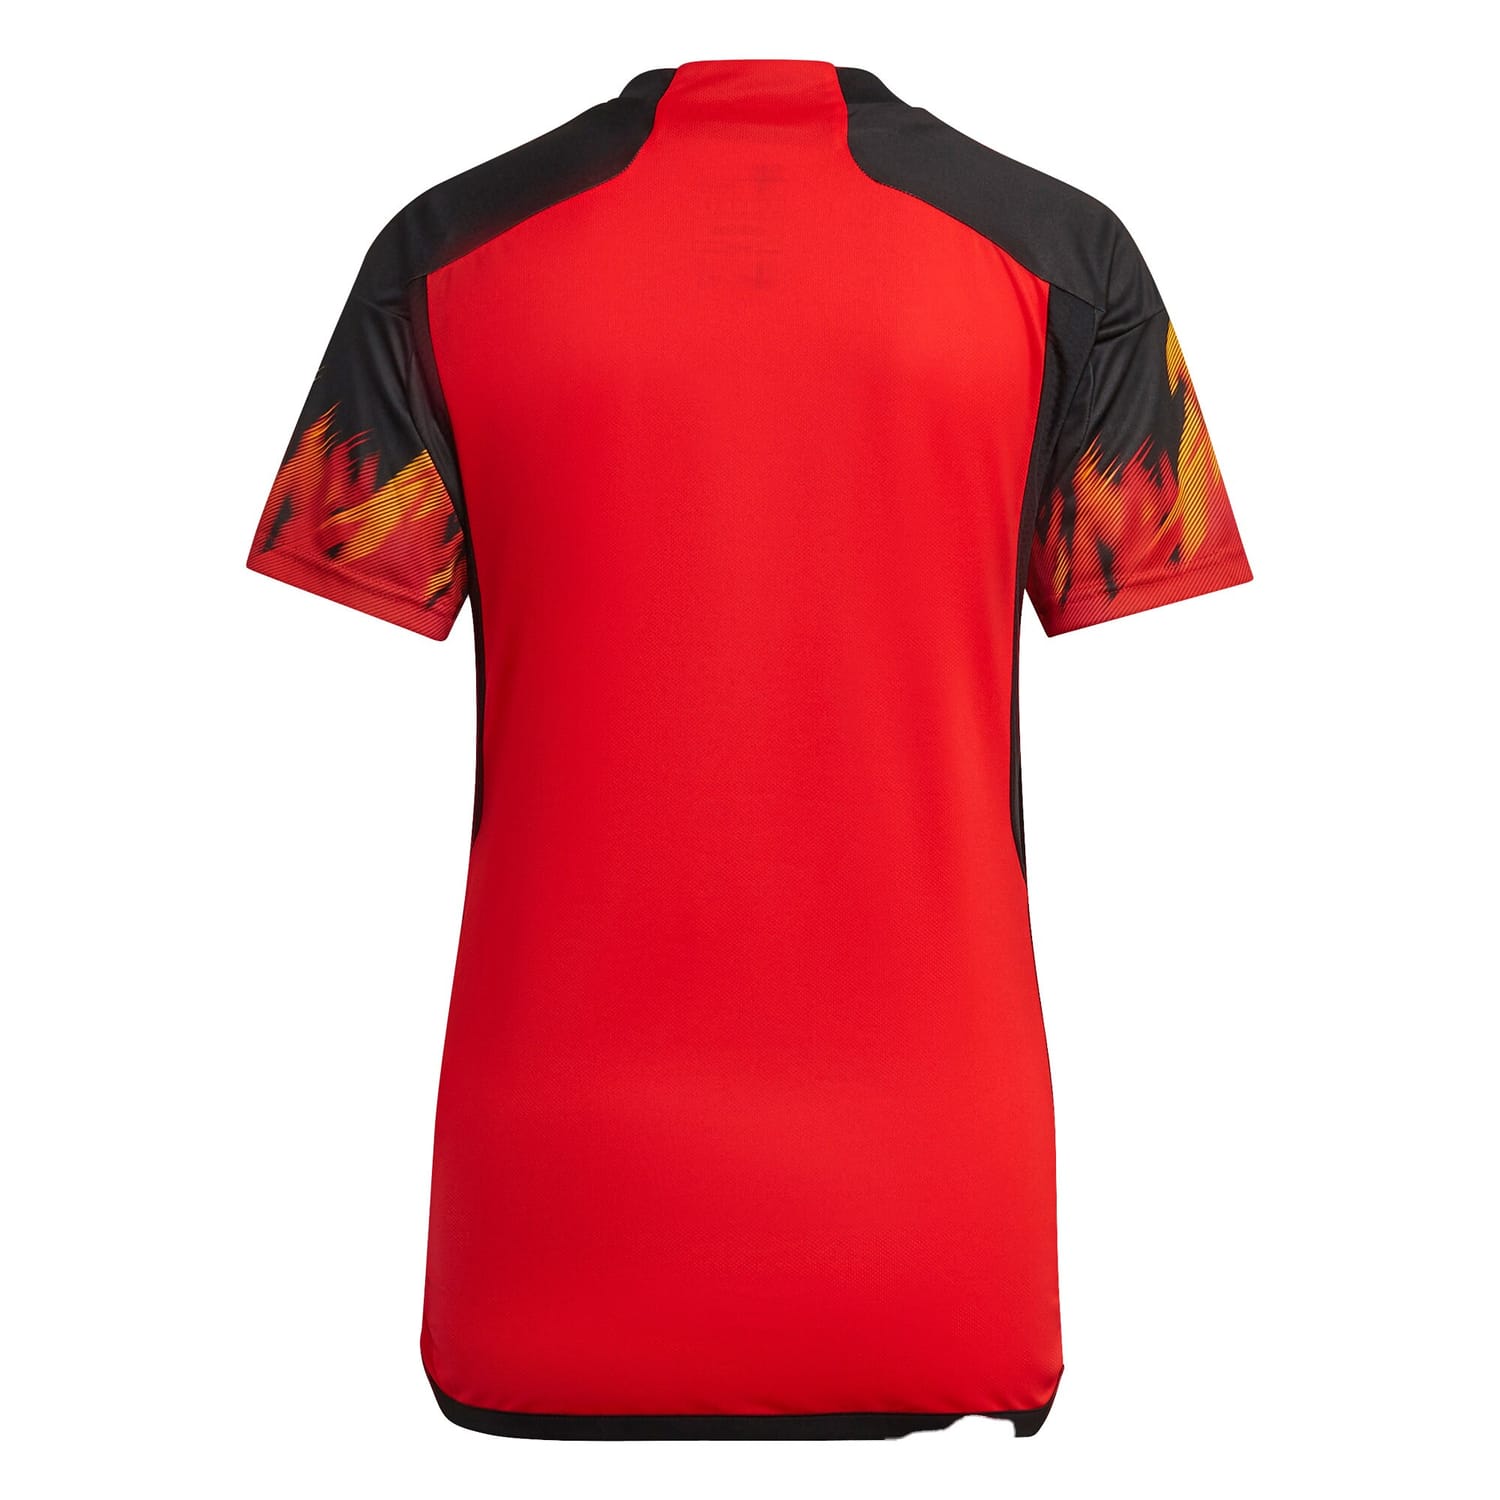 Belgium National Team Home Jersey Shirt Red 2022-23 for Women